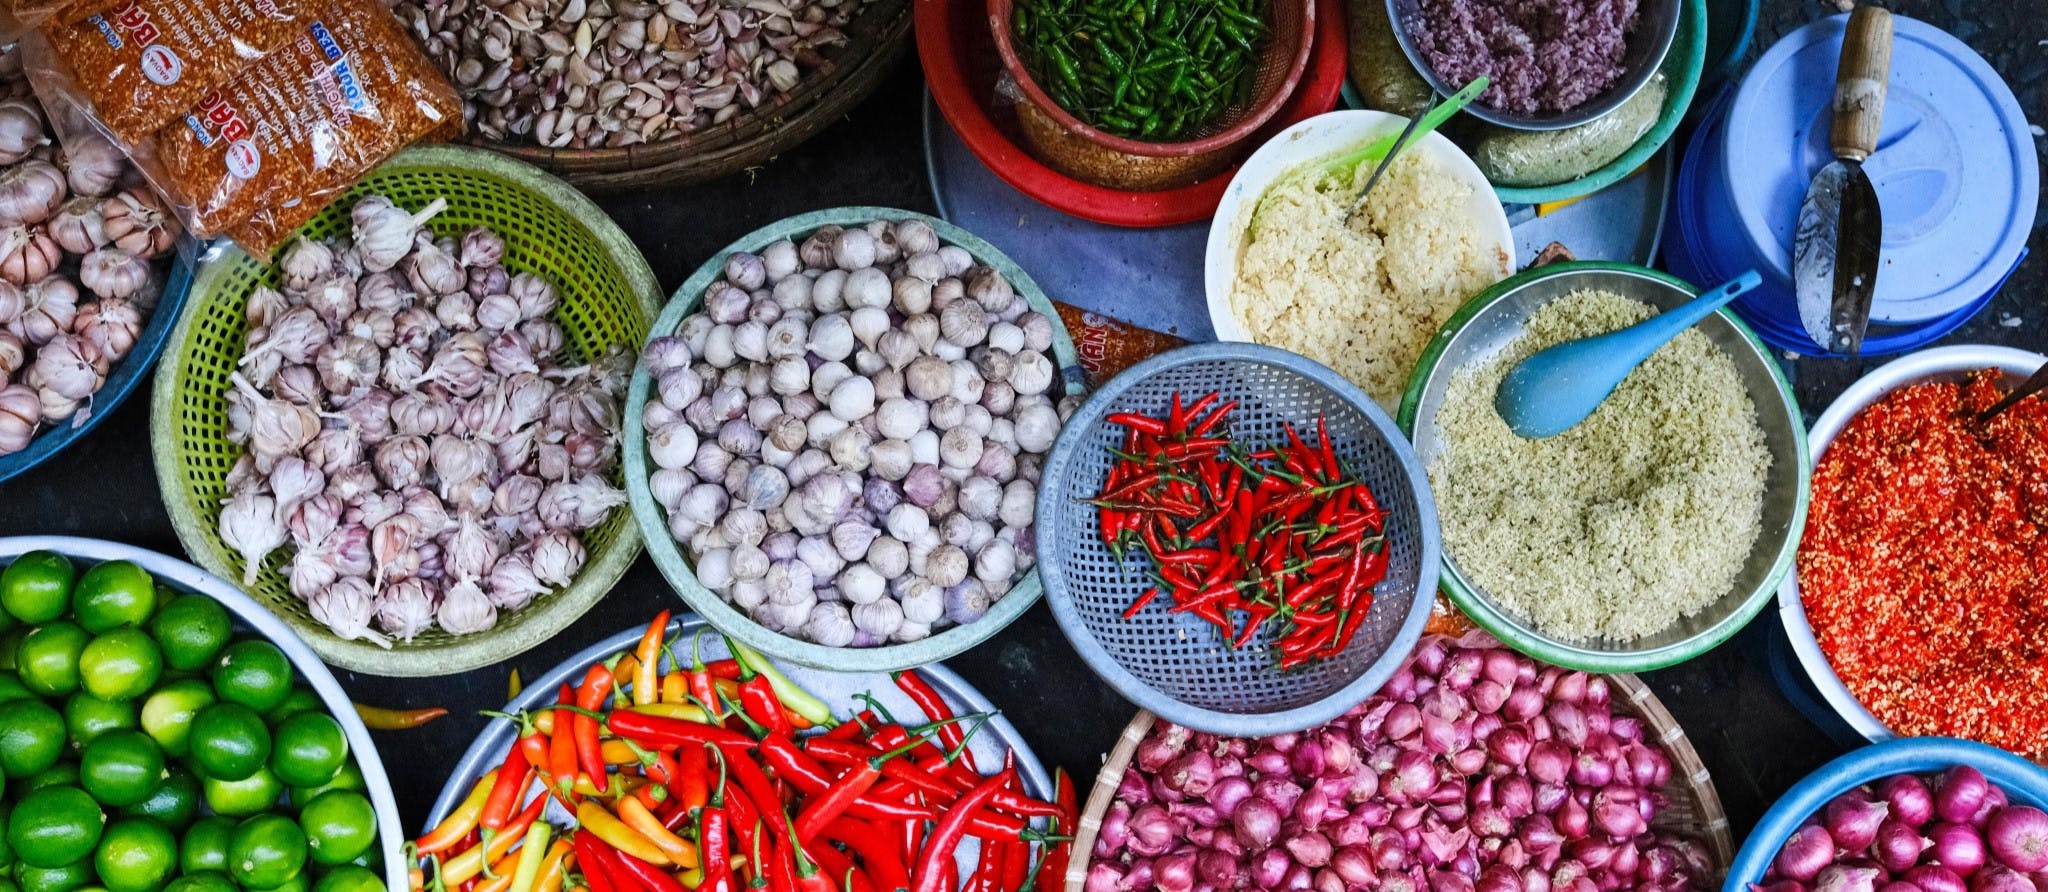 11 Fresh Produce Local Markets in Saigon, Ho Chi Minh City, Vietnam